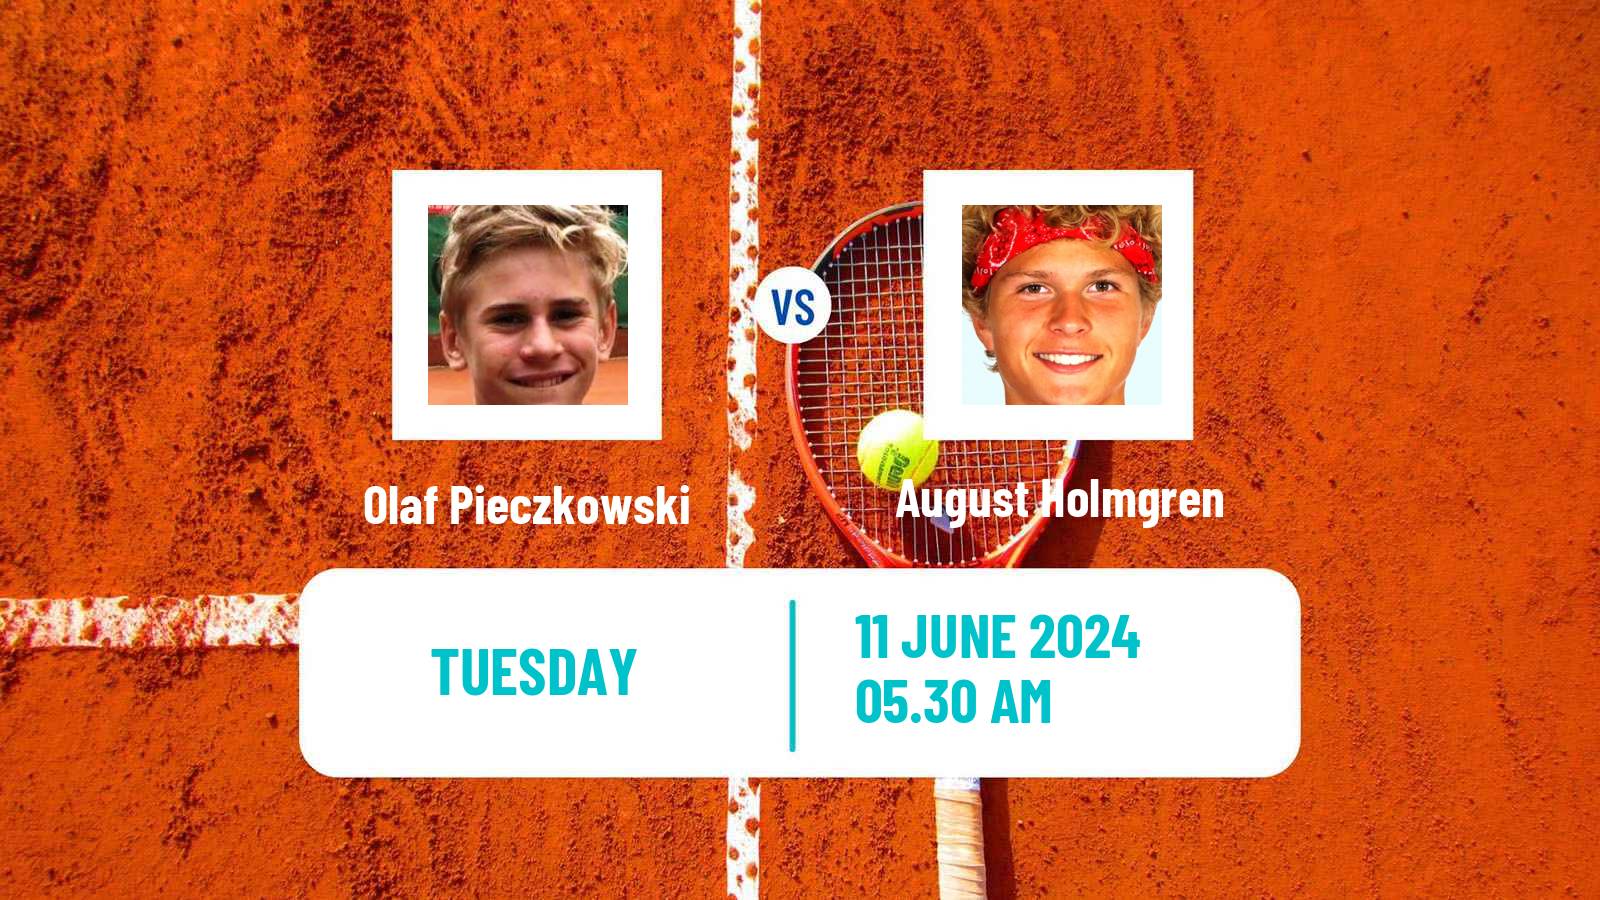 Tennis ITF M25 Aarhus Men Olaf Pieczkowski - August Holmgren